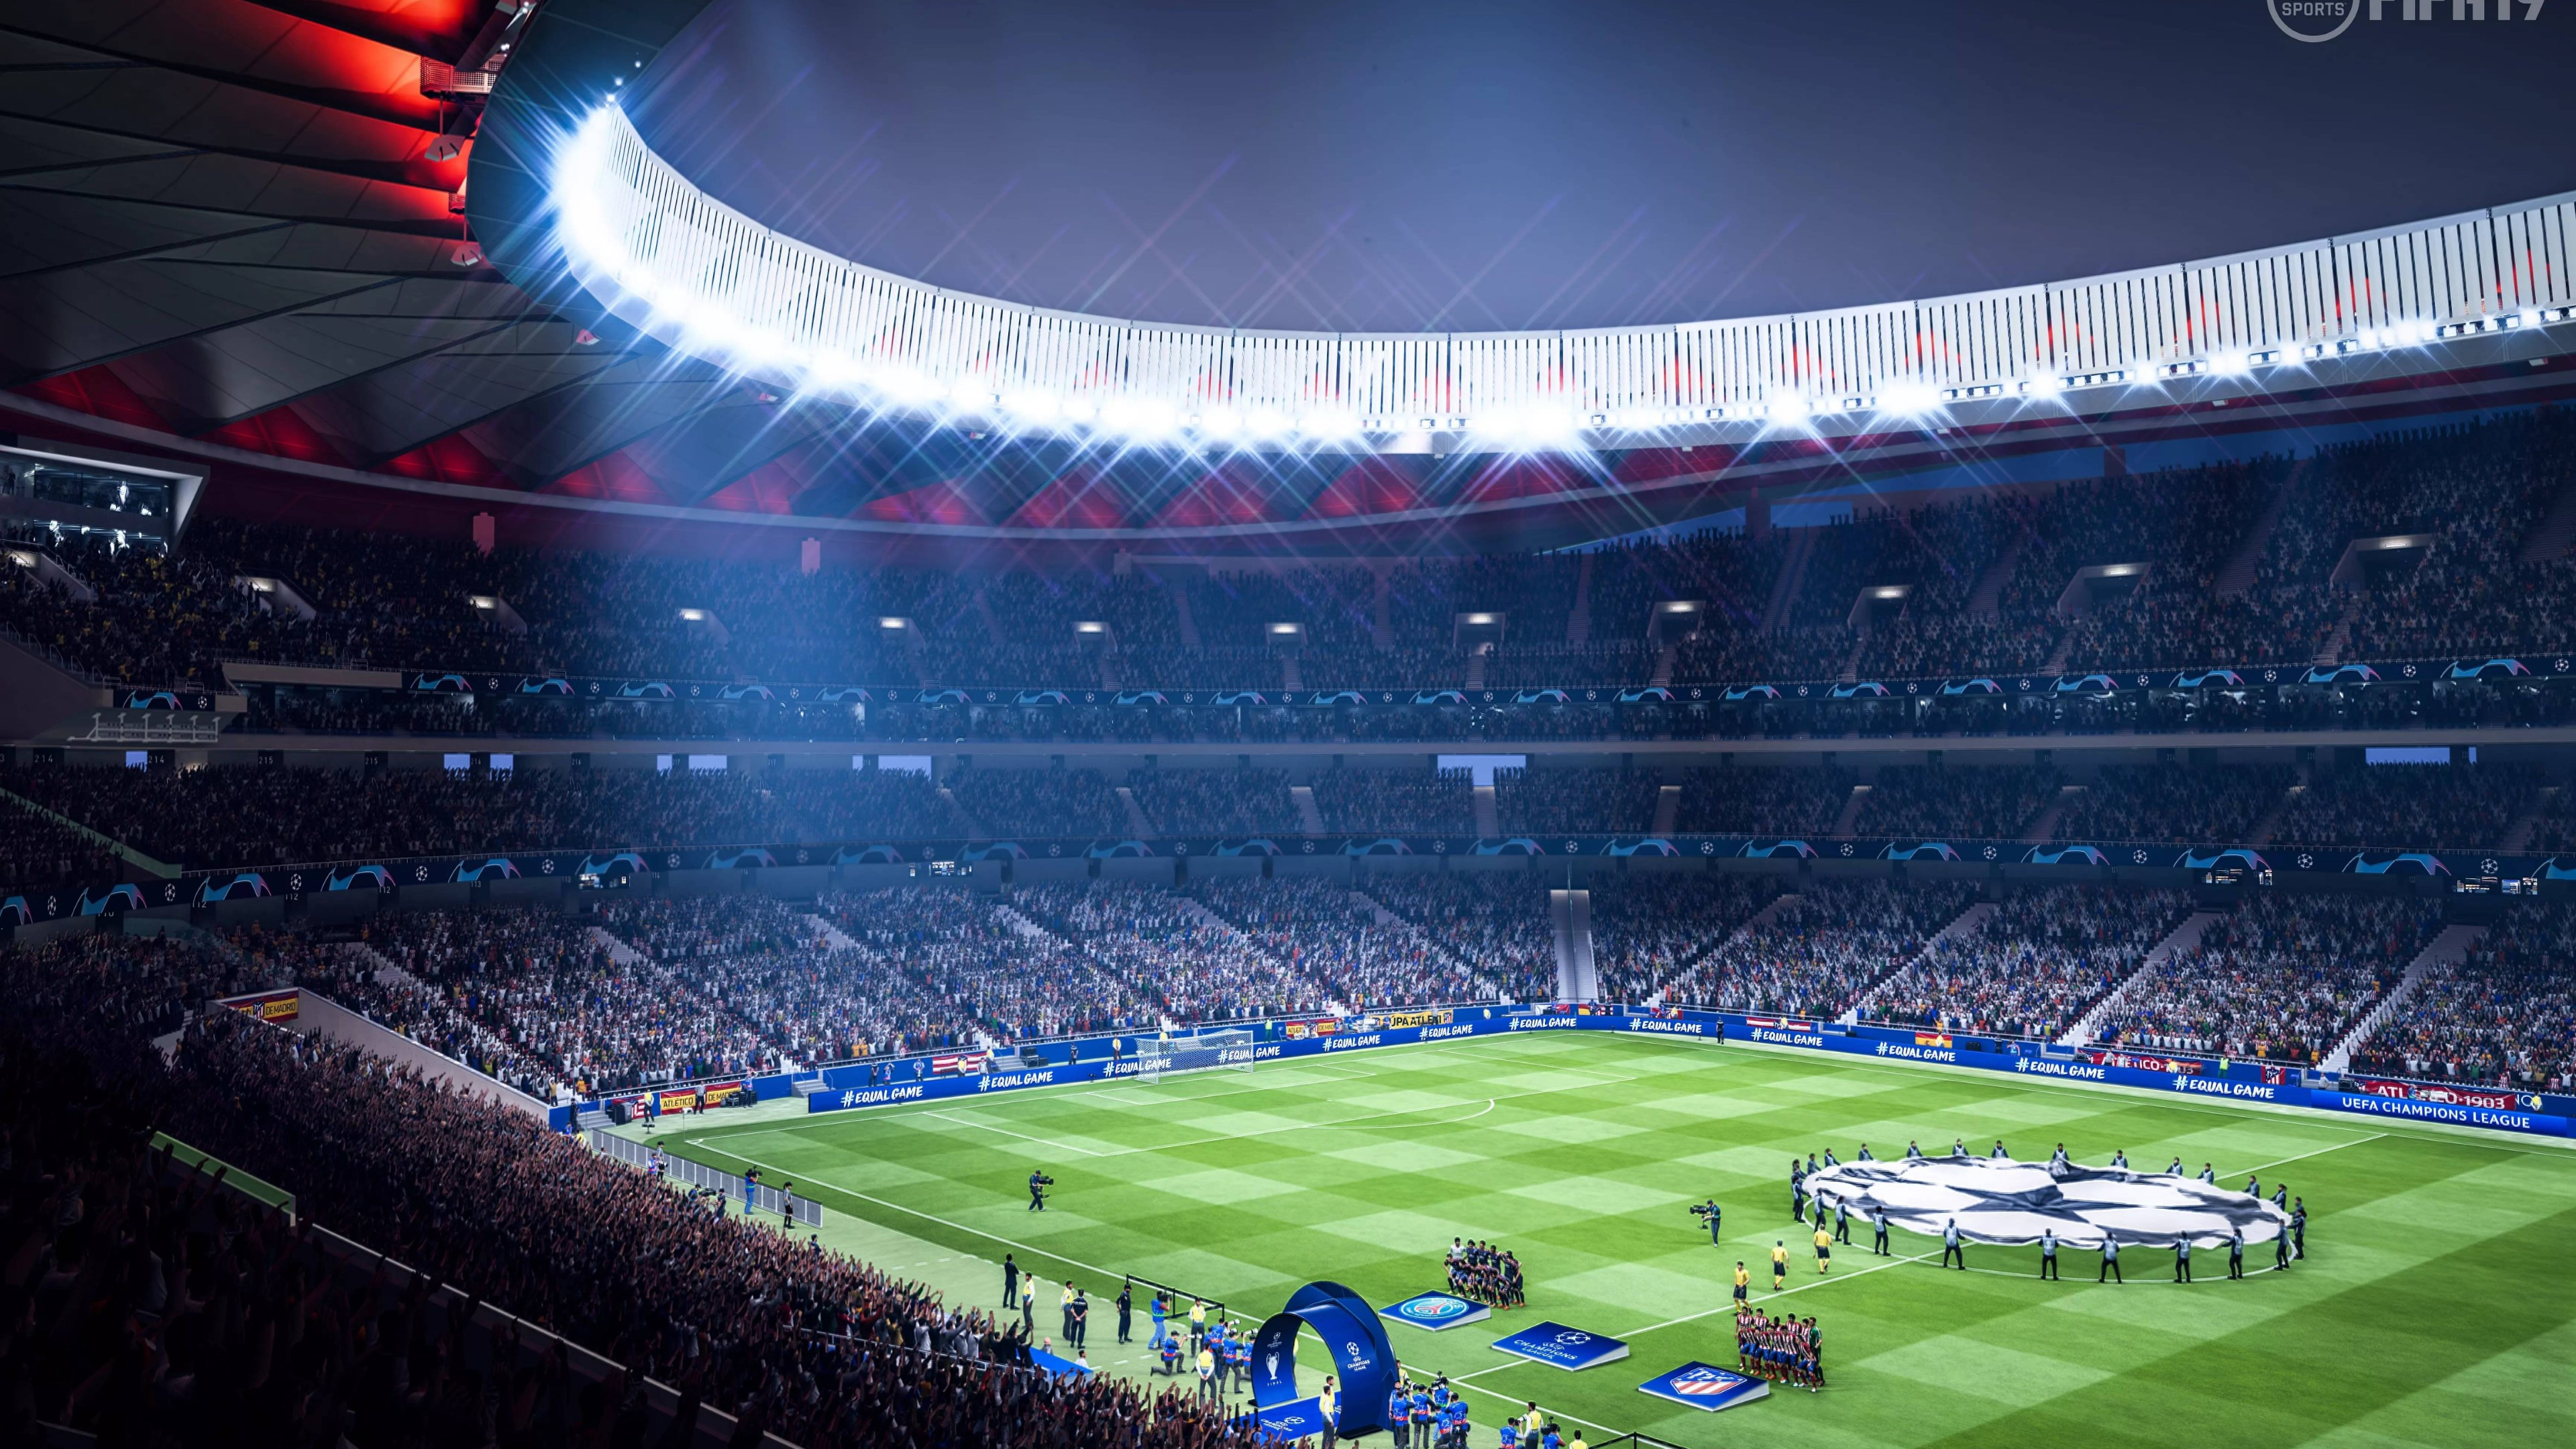 Download wallpaper: Fifa 19 stadium 3840x2160